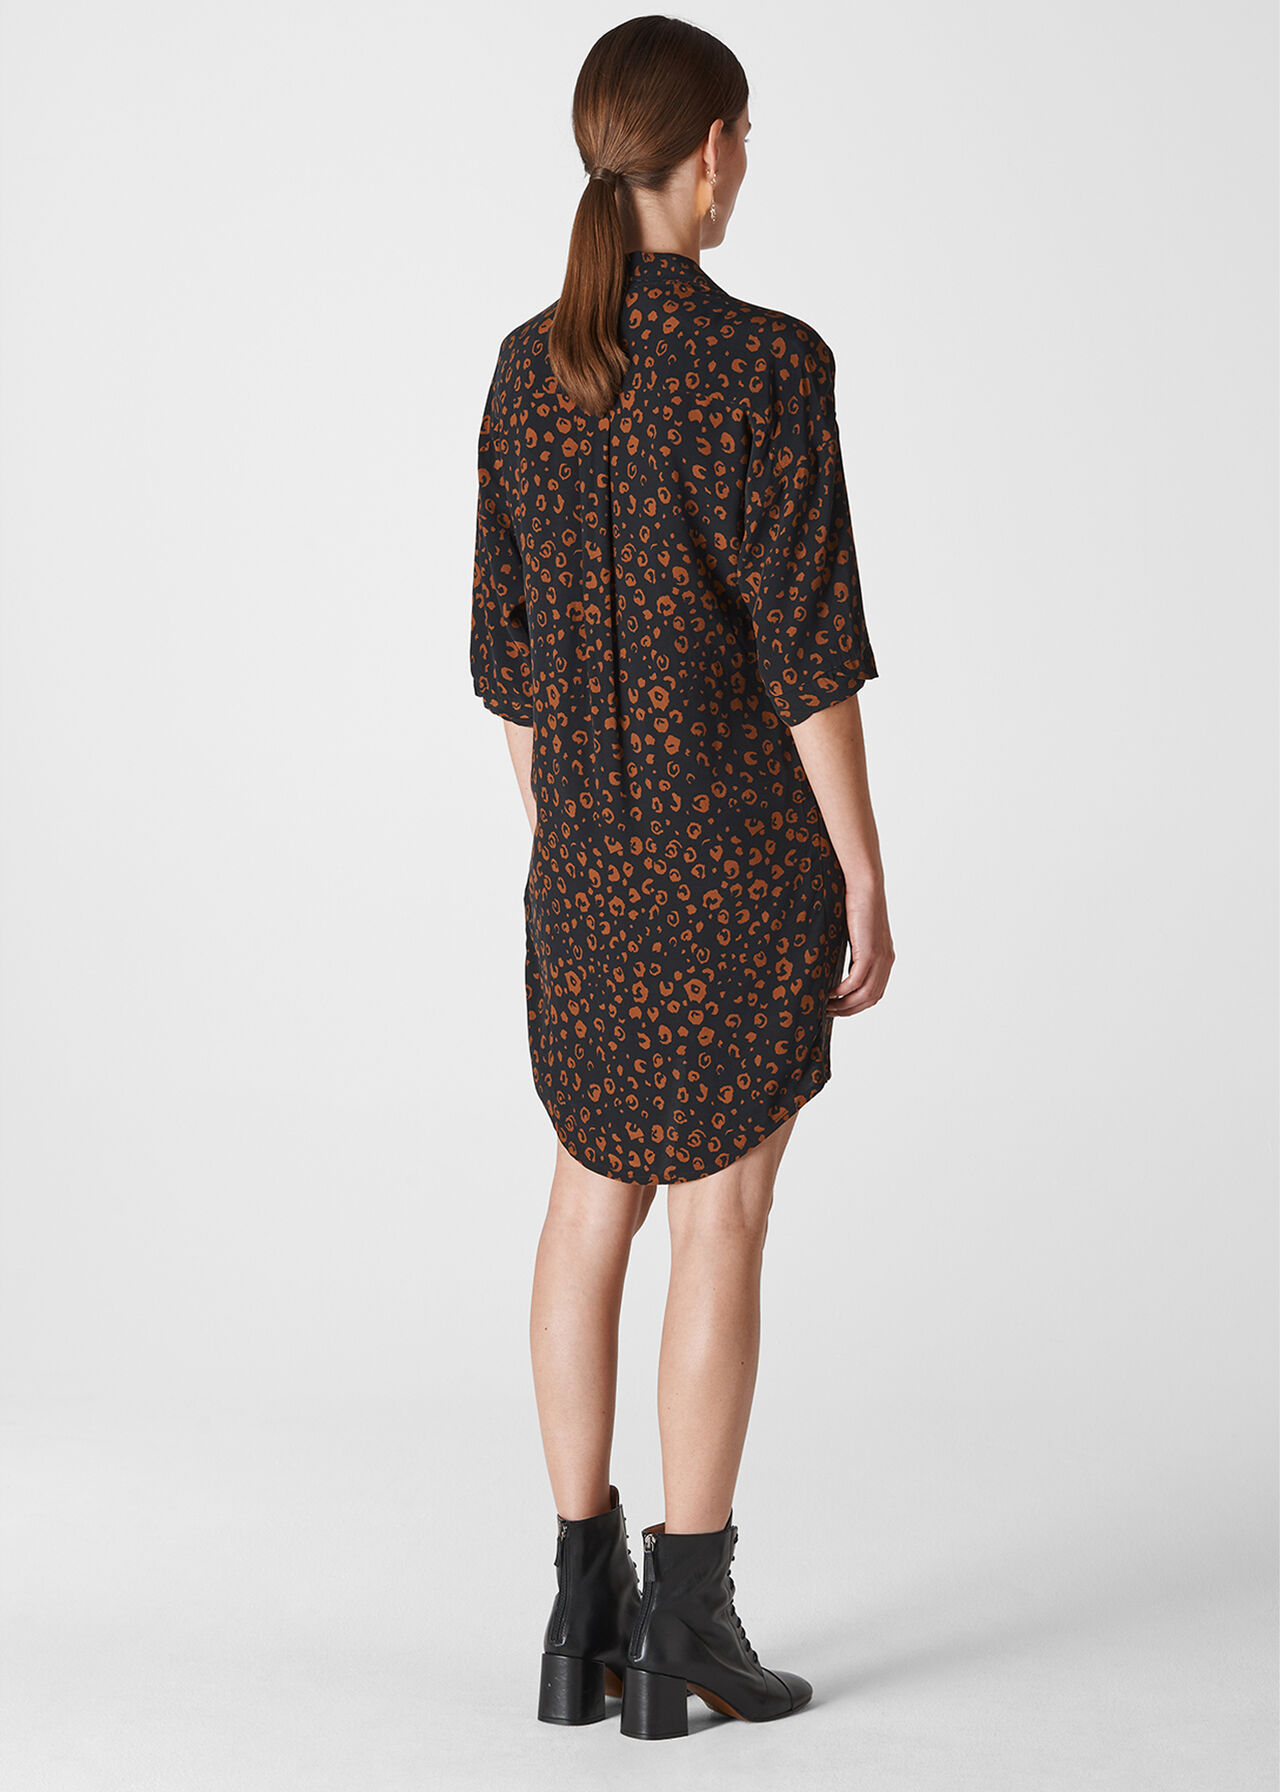 Lola Cheetah Print Dress